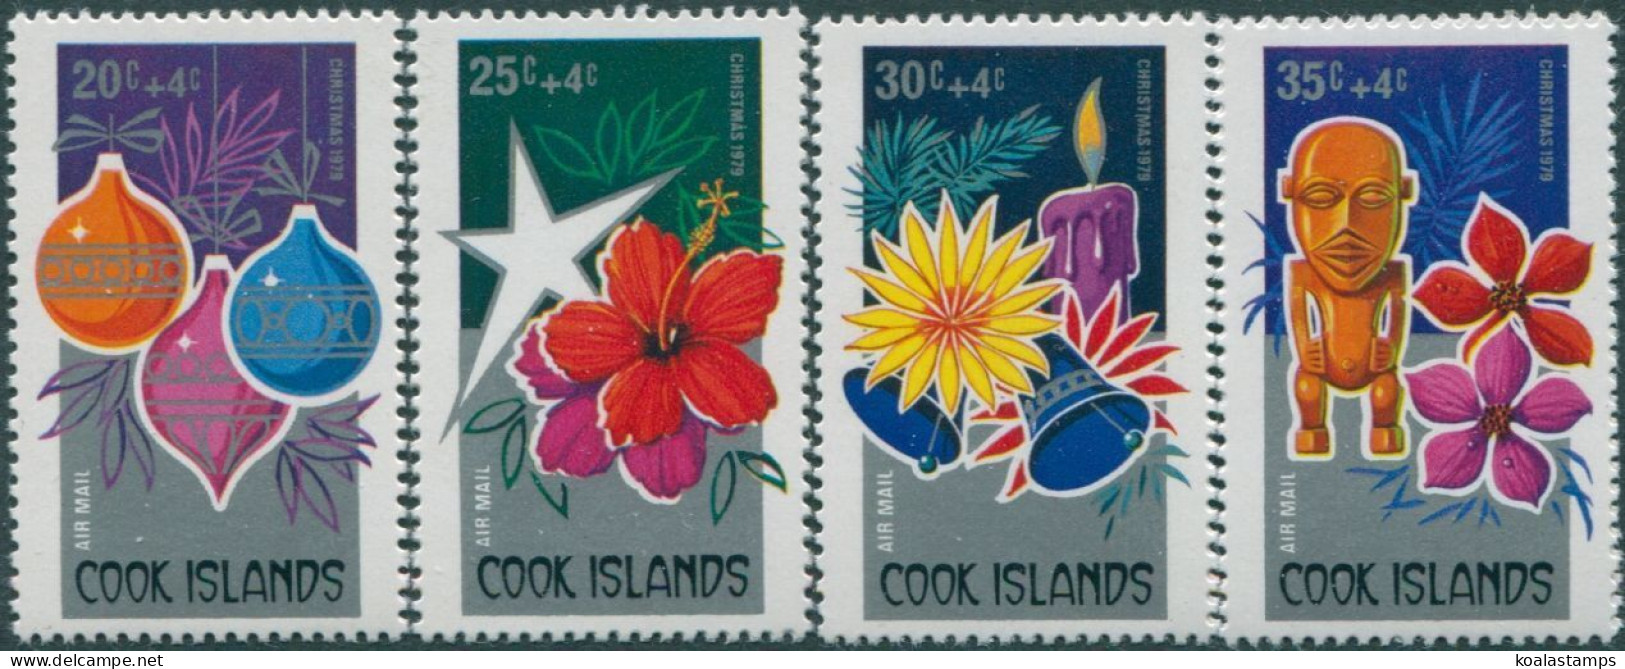 Cook Islands 1979 SG671-674 Christmas Airmail Surcharges Set MNH - Cookeilanden